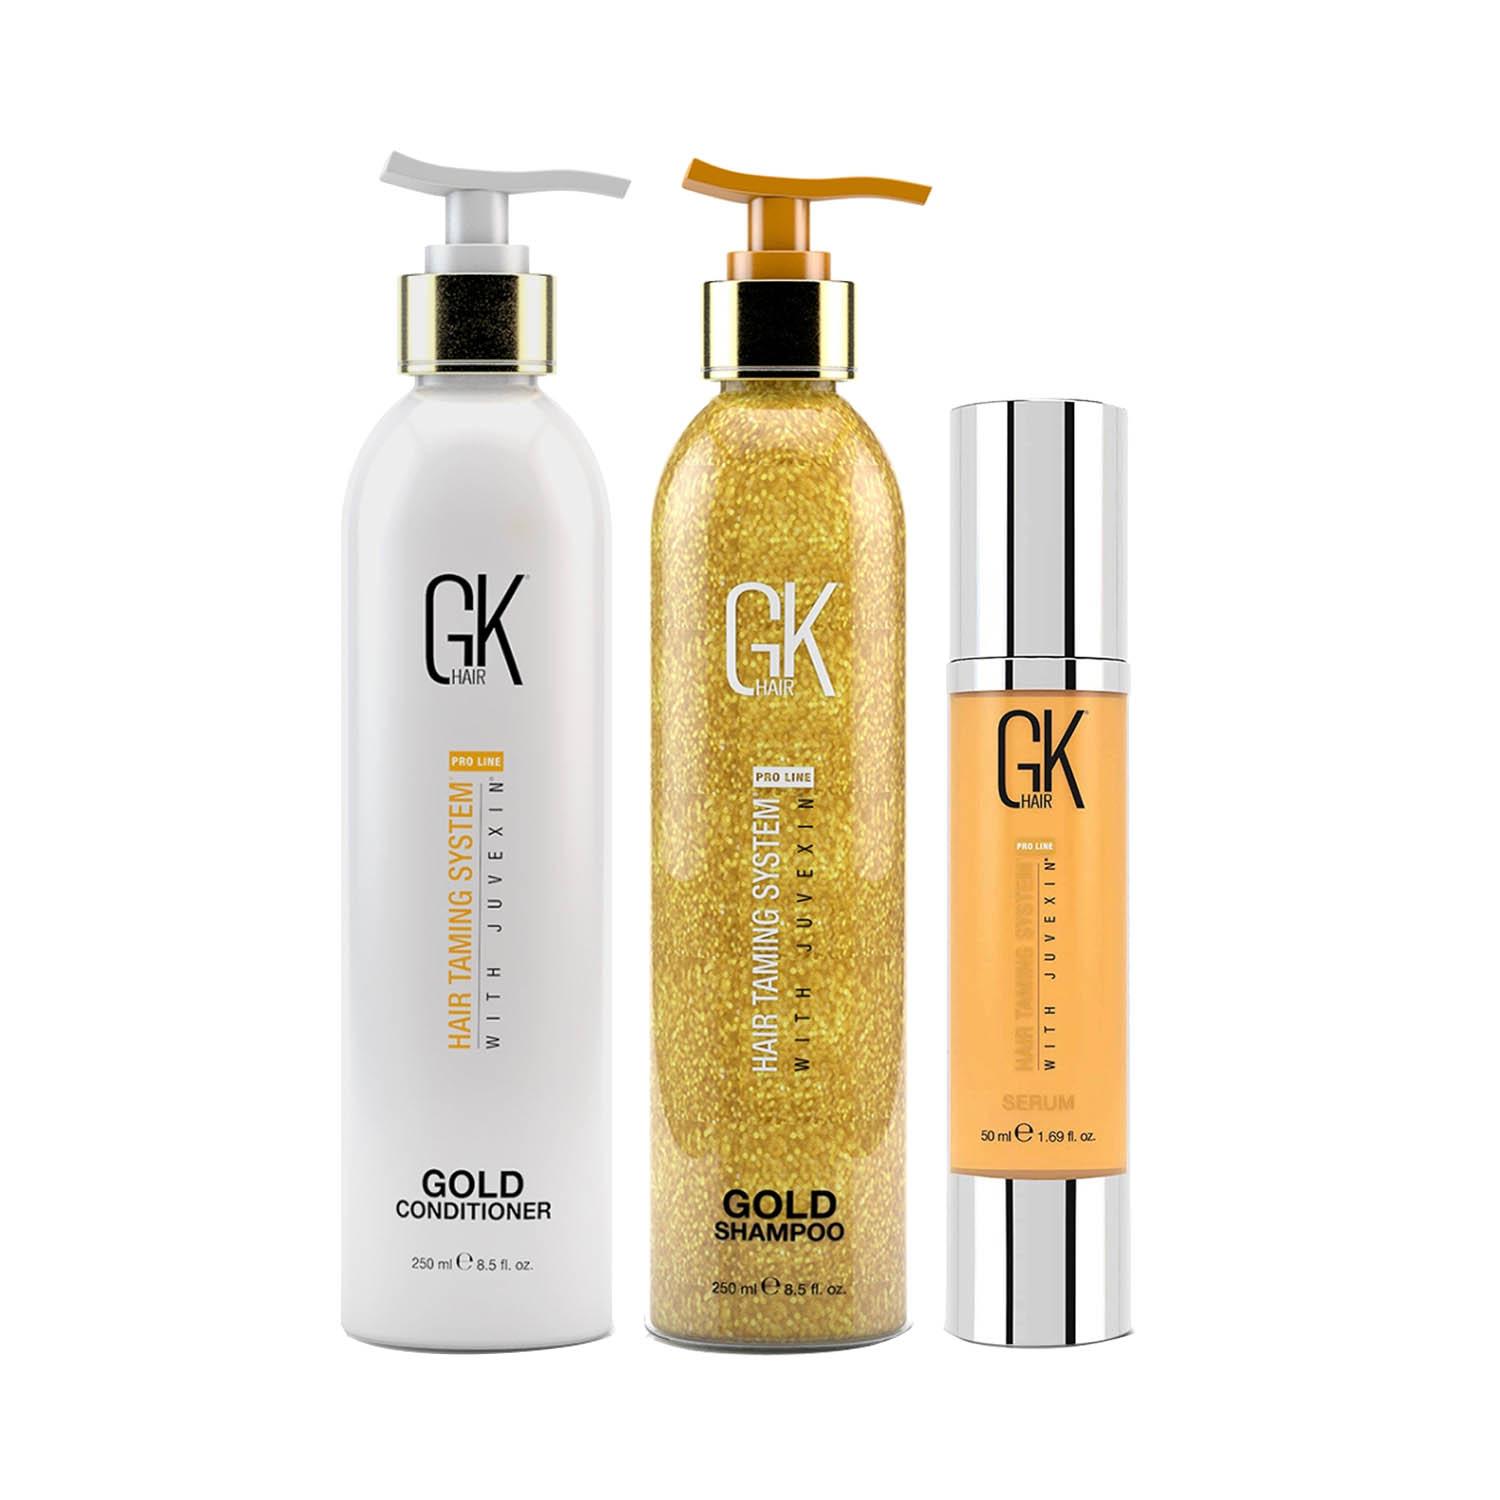 GK Hair | GK Hair Gold Shampoo and Conditioner (250ml) with Argan Serum (50ml) Combo